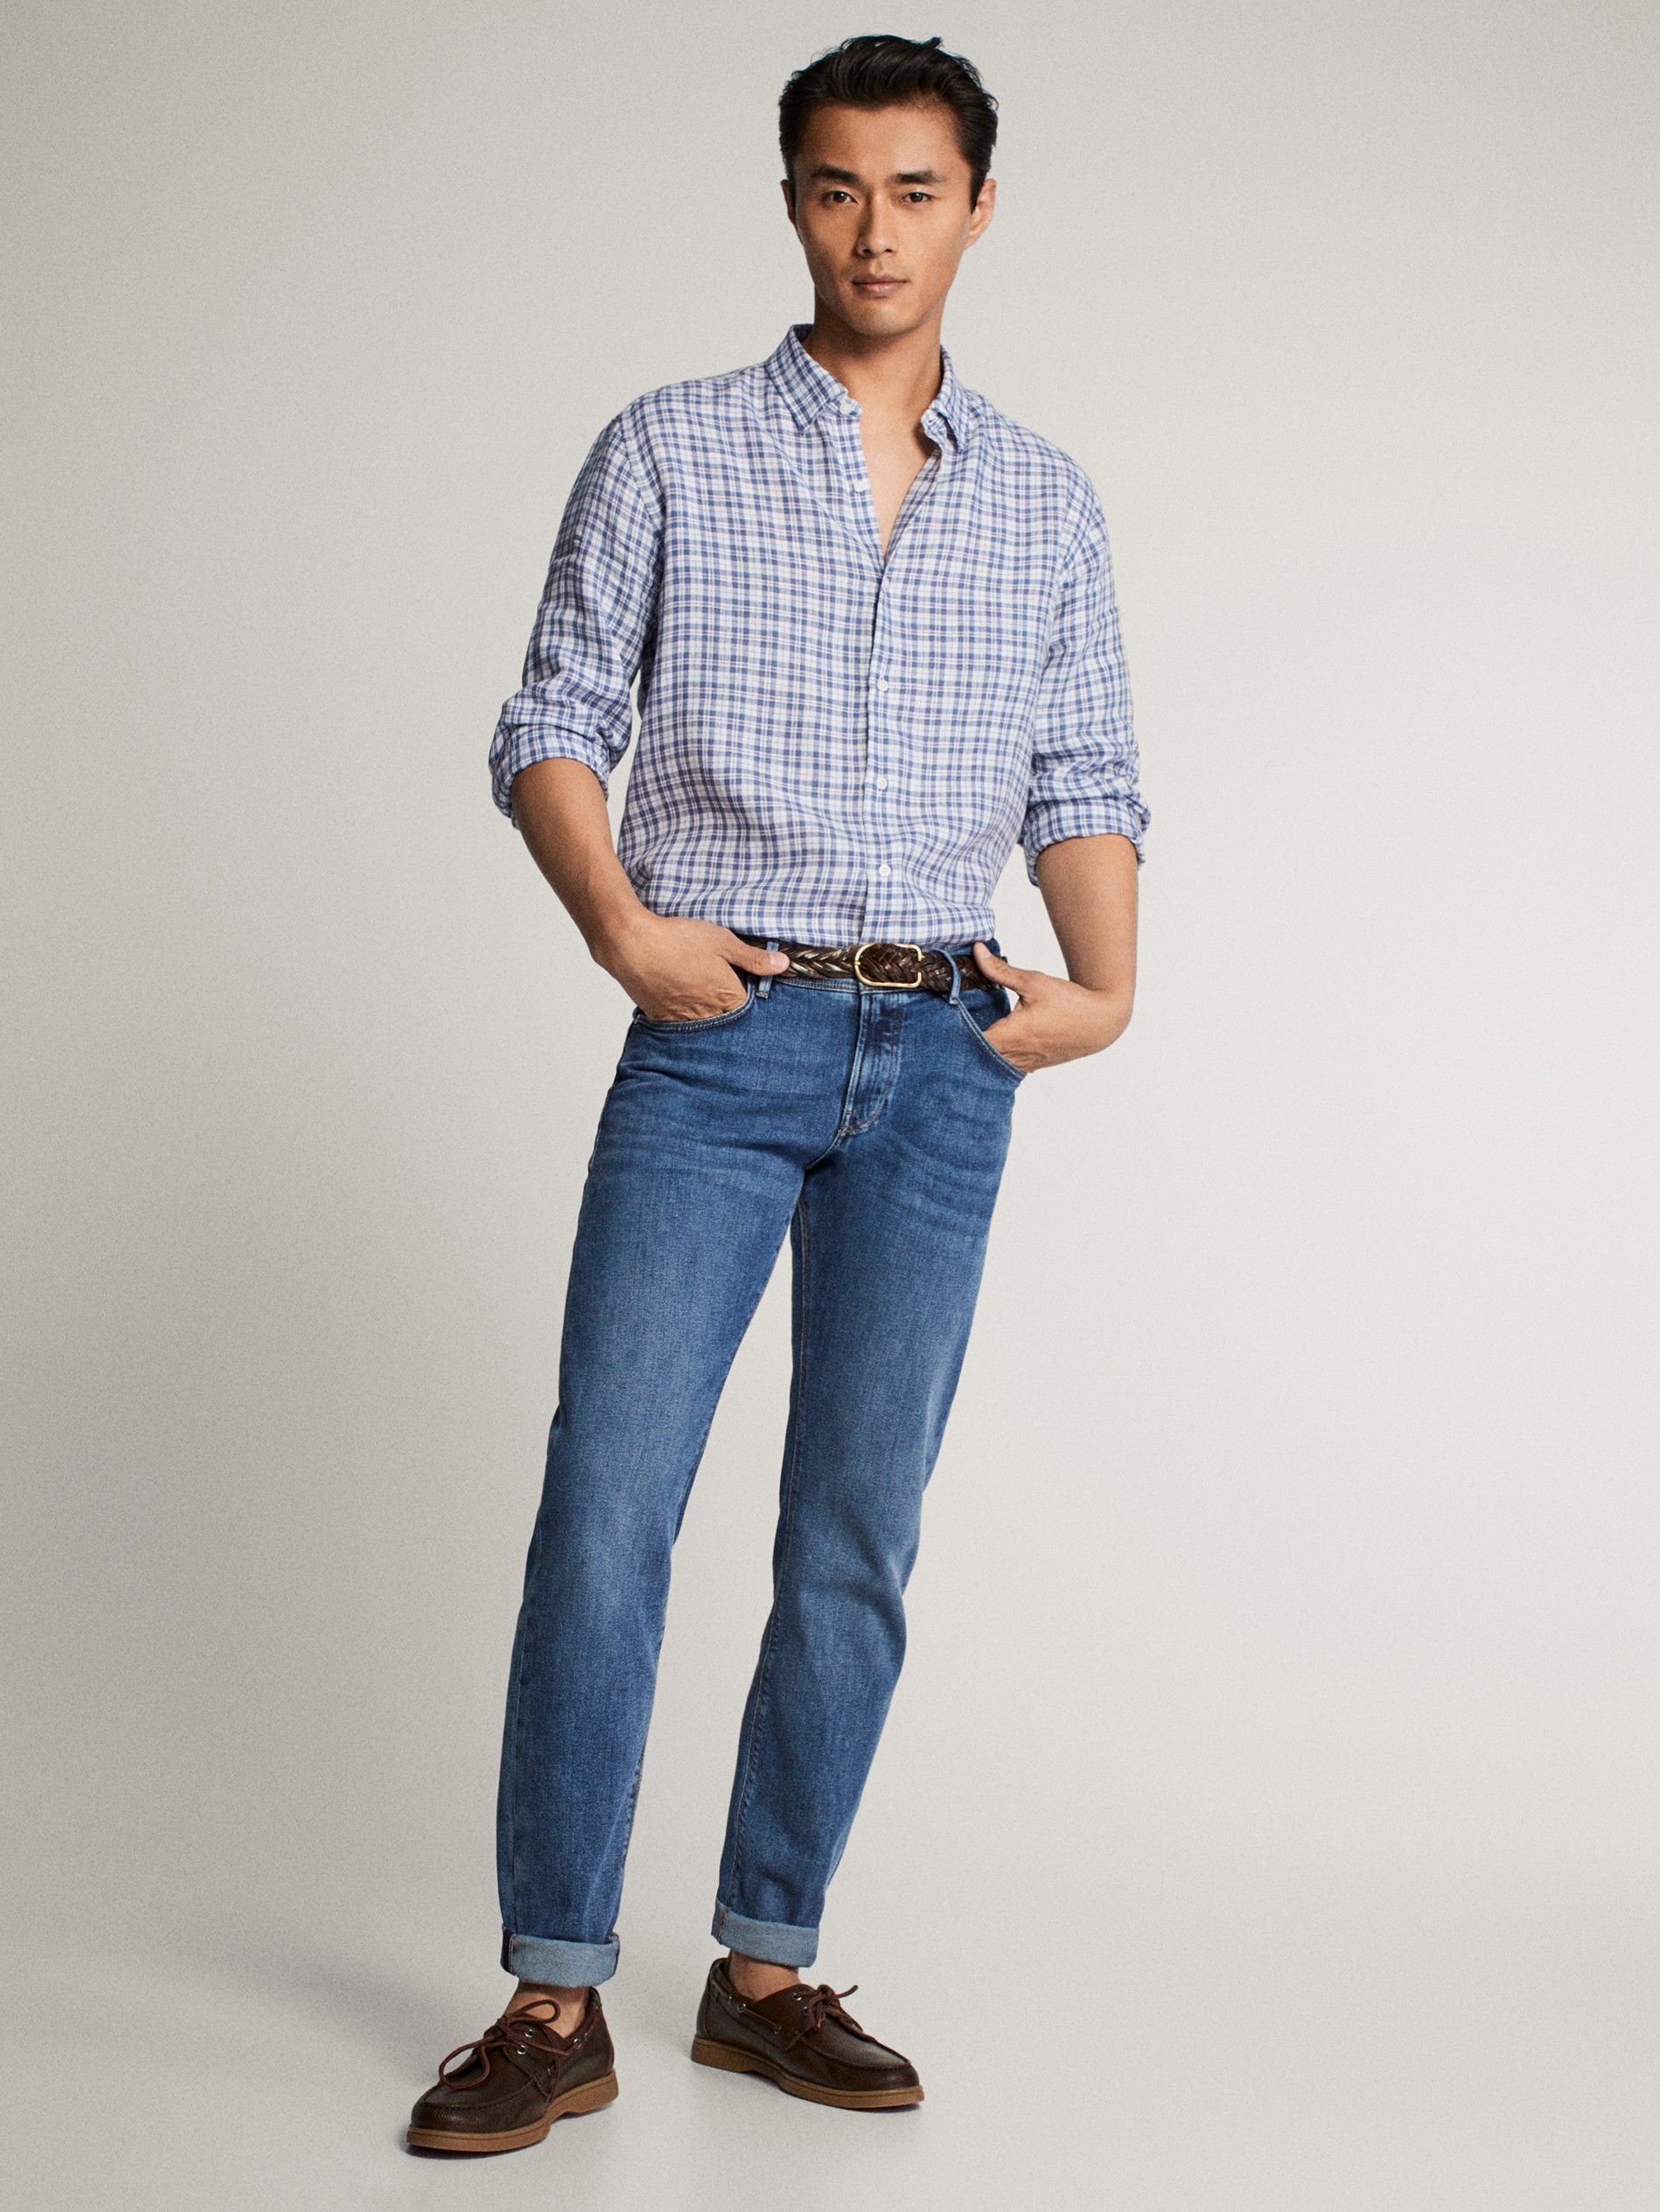 Massimo Dutti Blue Medium Check 100% Linen Shirt - Big Apple Buddy